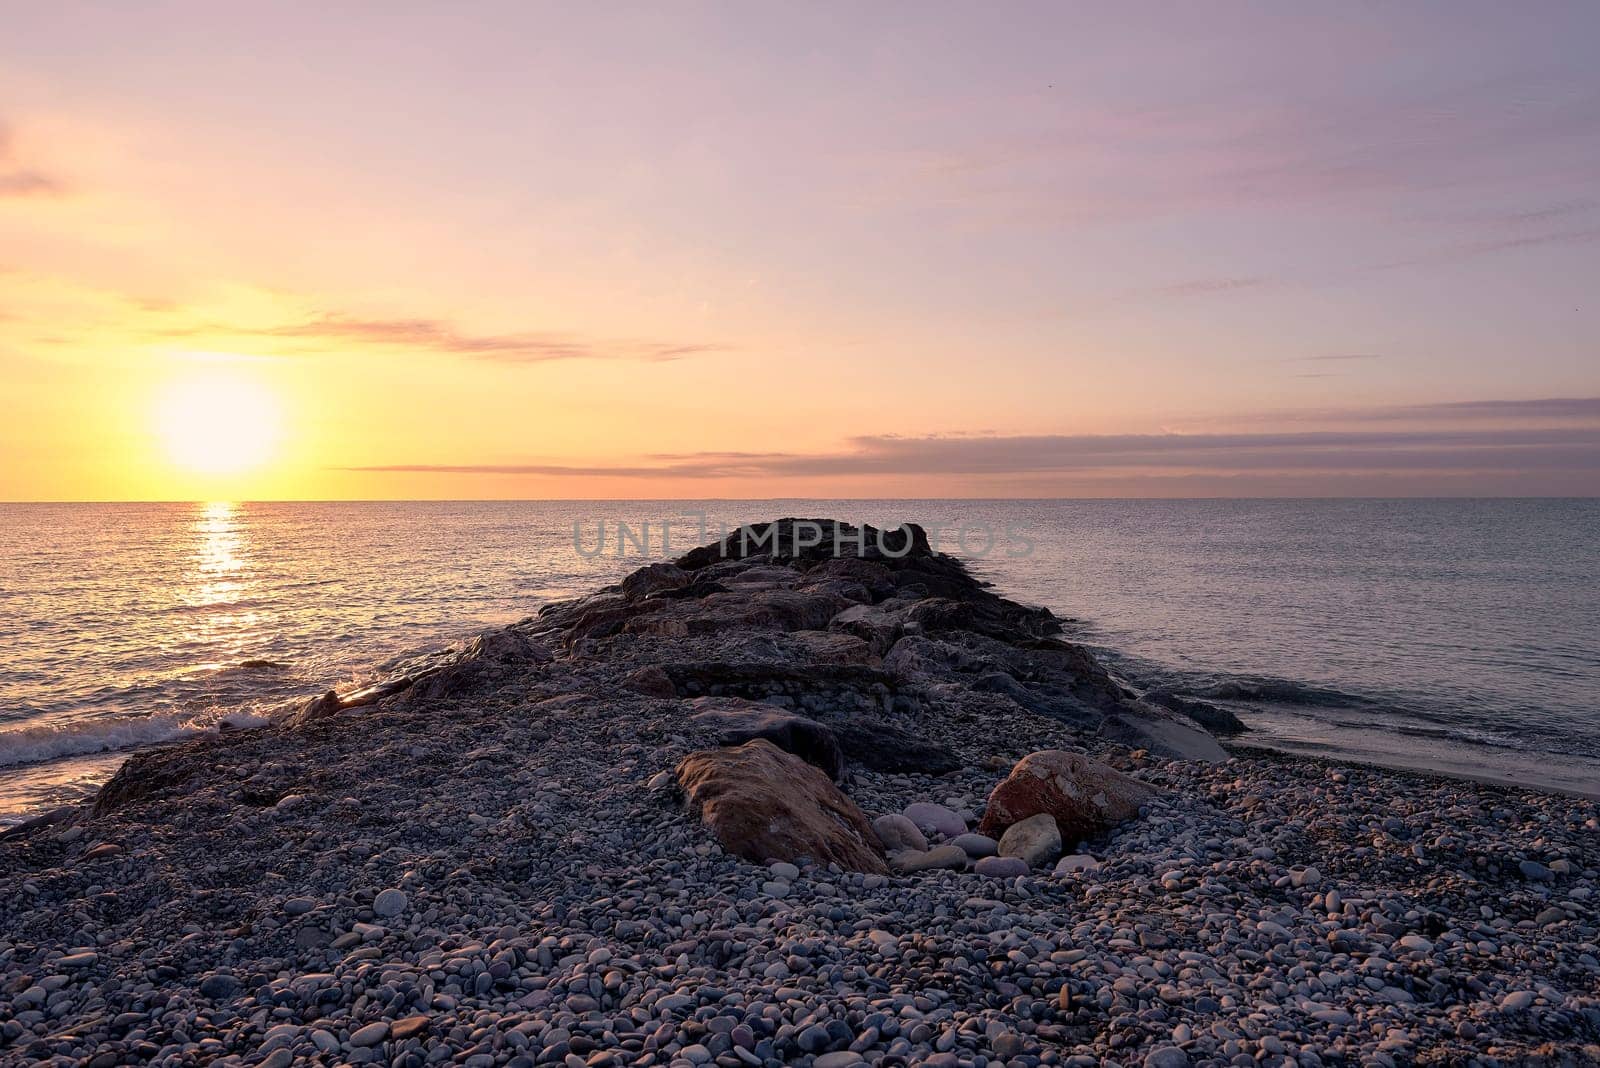 Breakwater on the rocky beach at sunrise. Lonely beach, sunshine, orange sky, small stones, calm sea